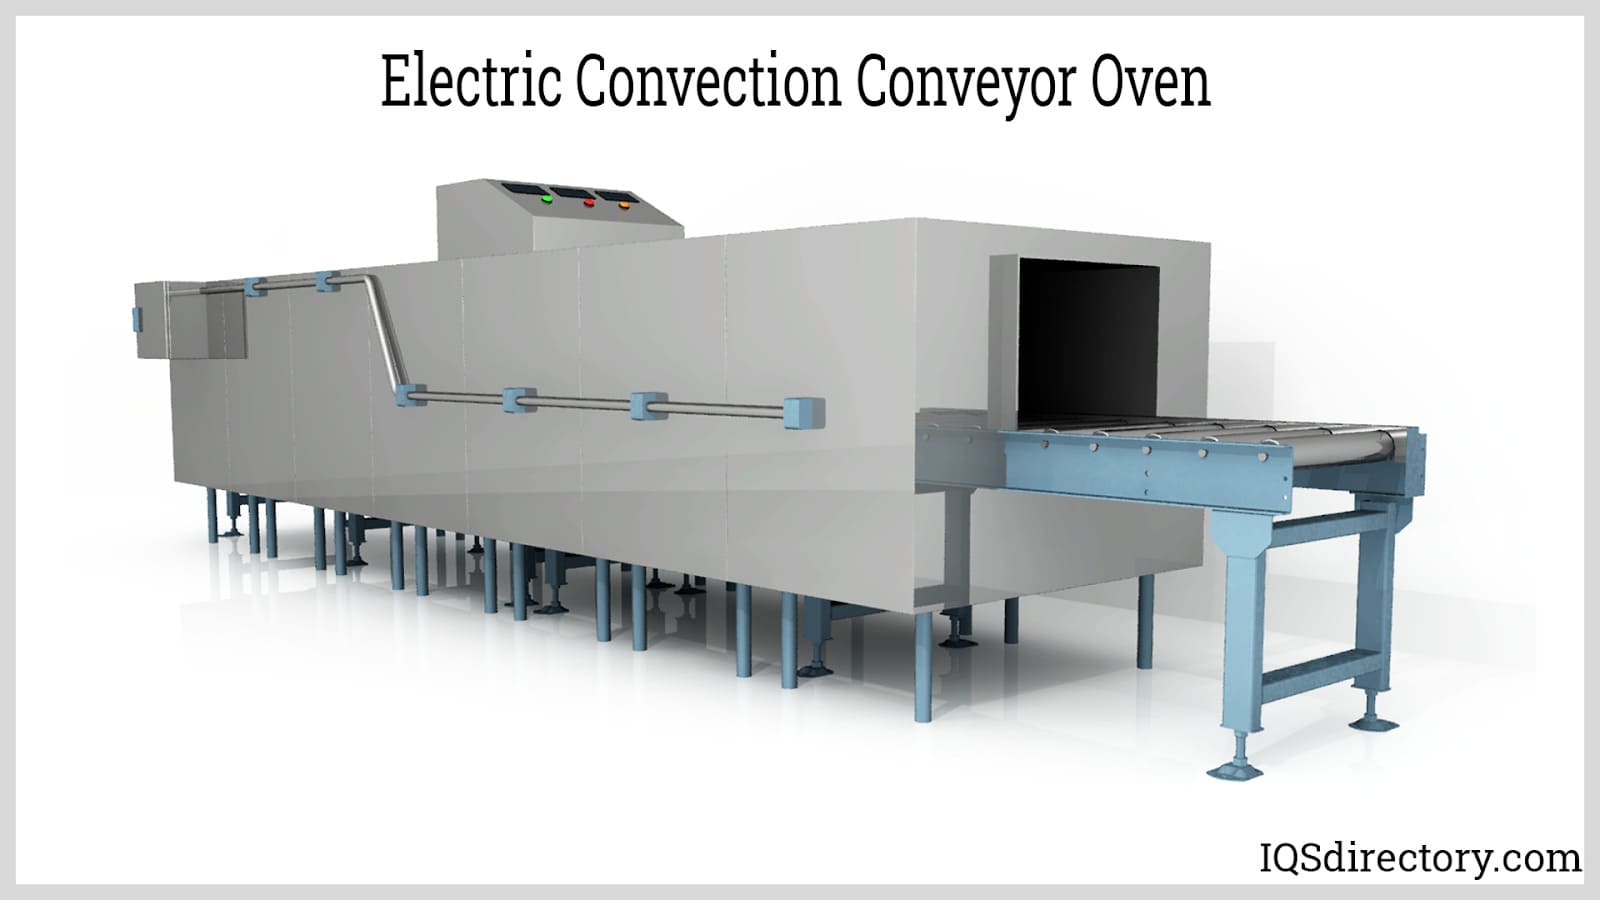 Electric Convection Conveyor Oven